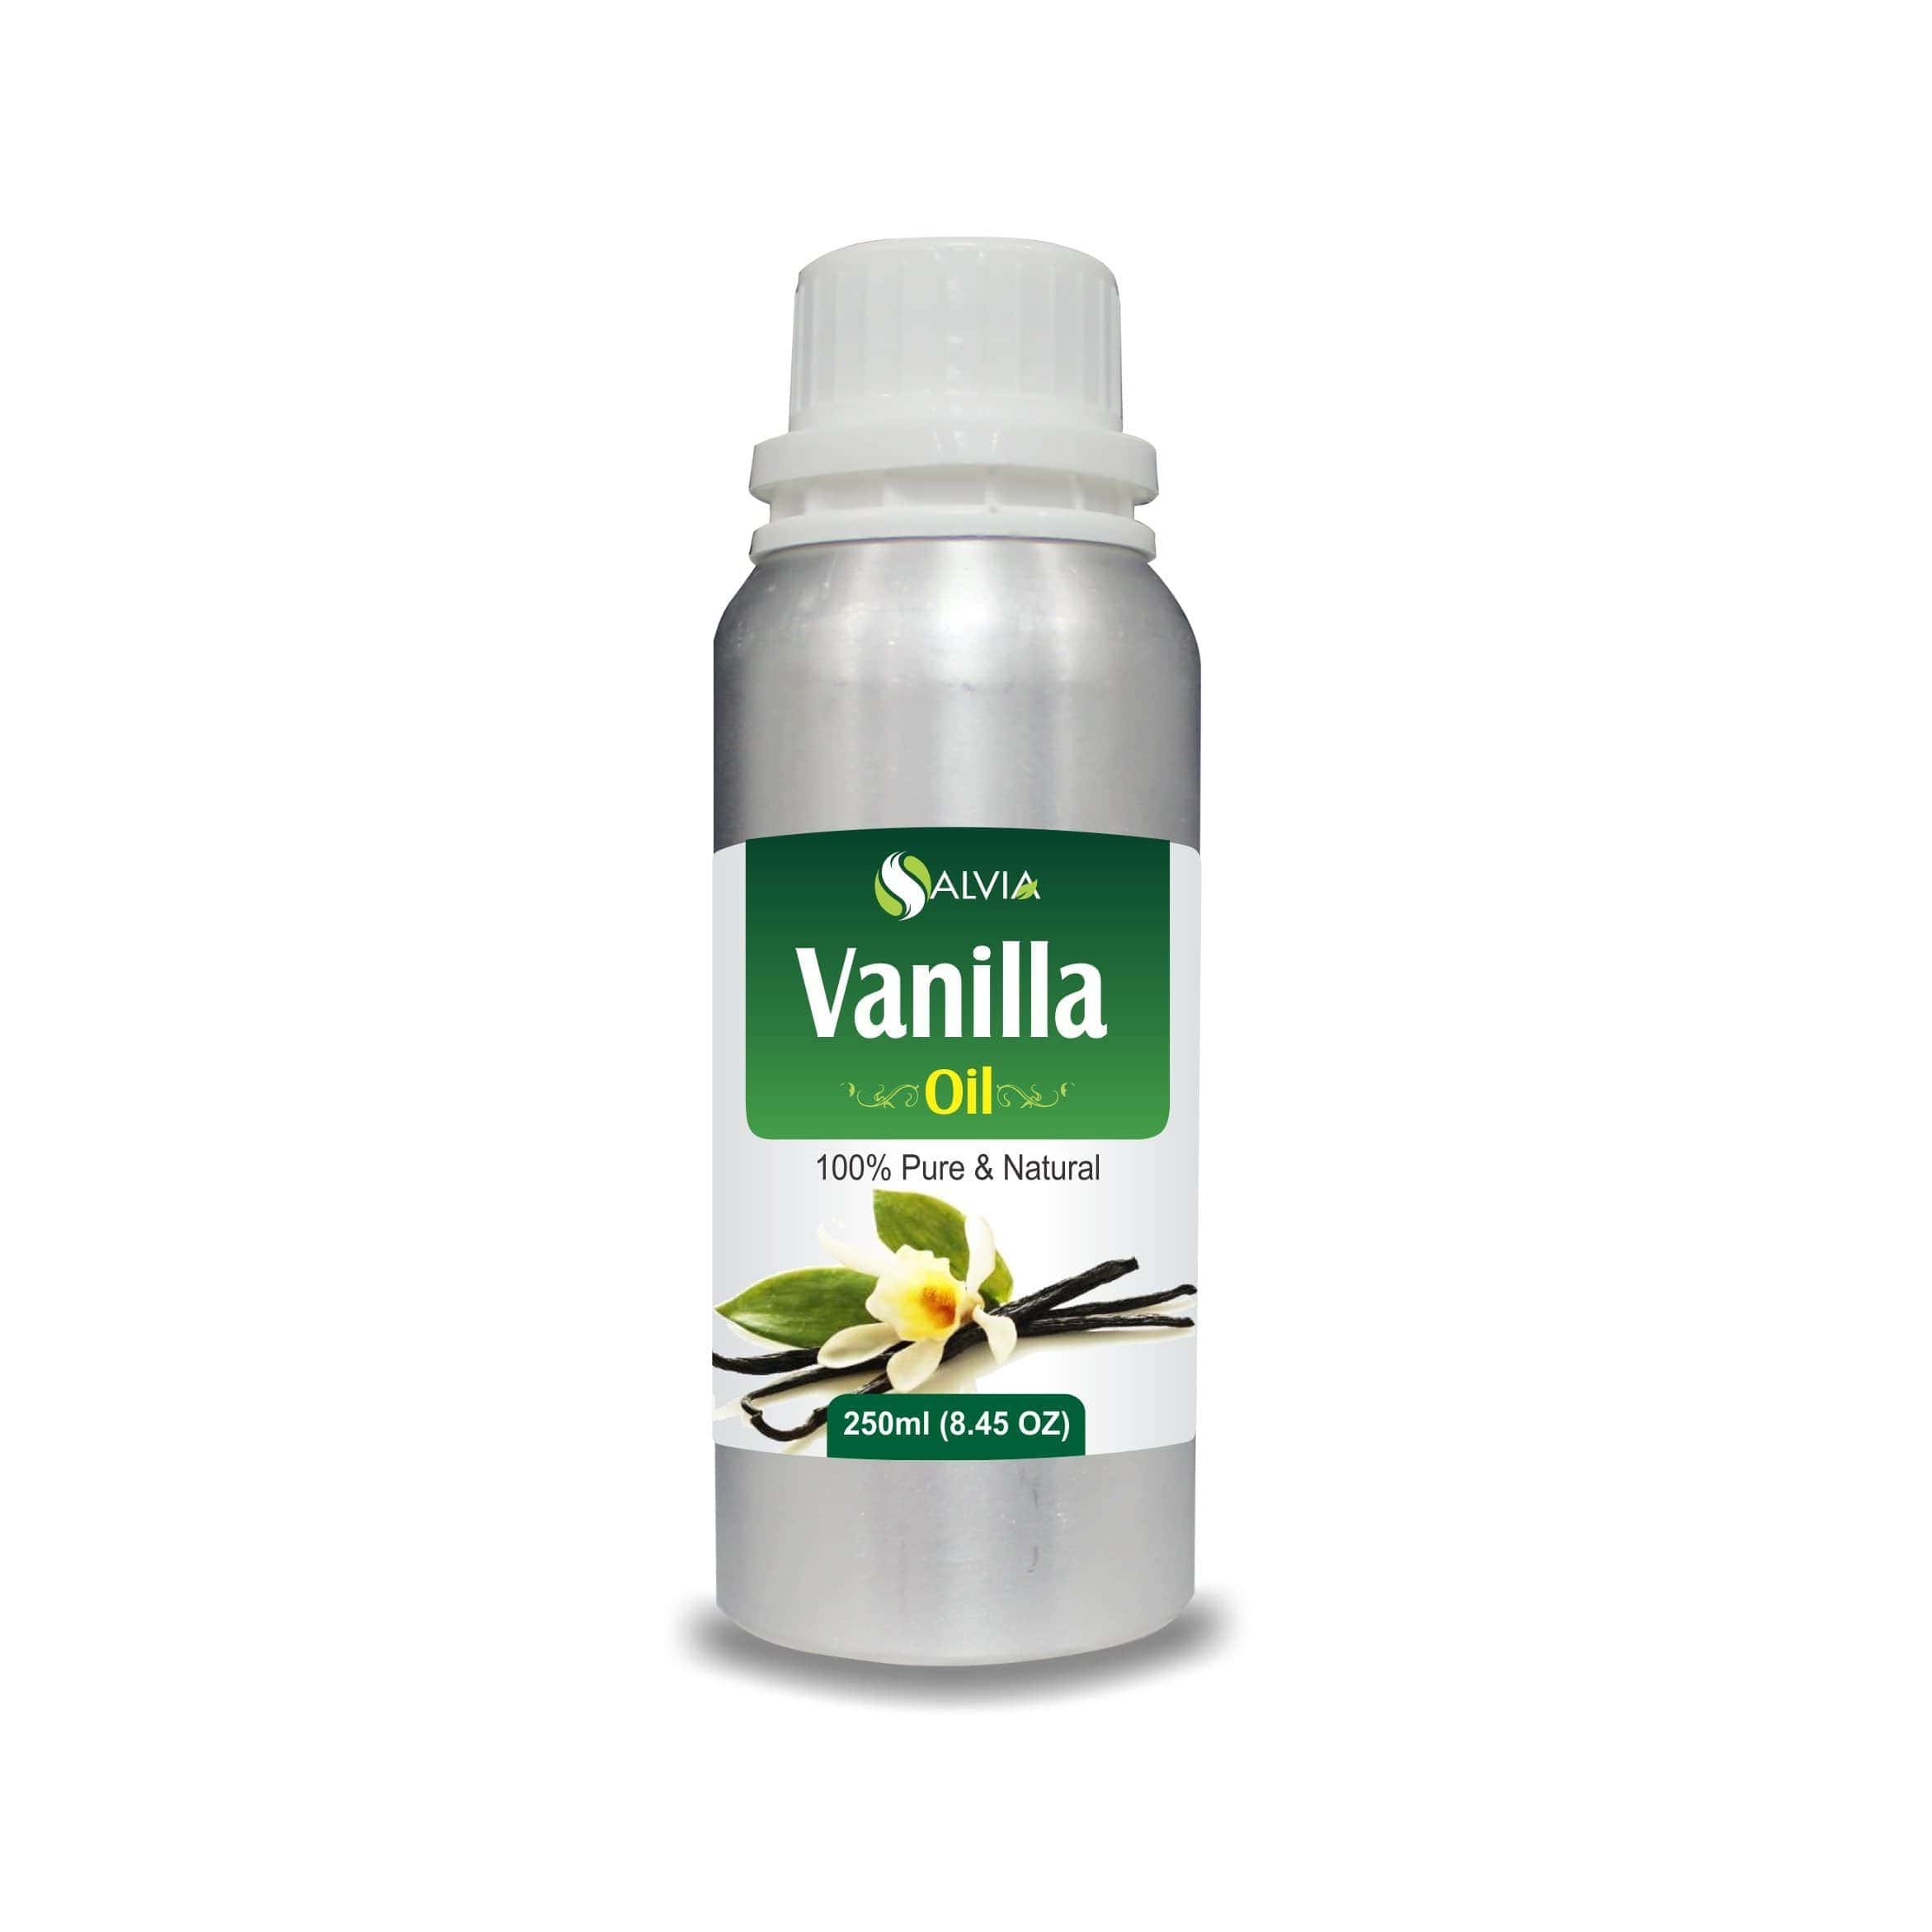 vanilla essential oil benefits - Shoprythm